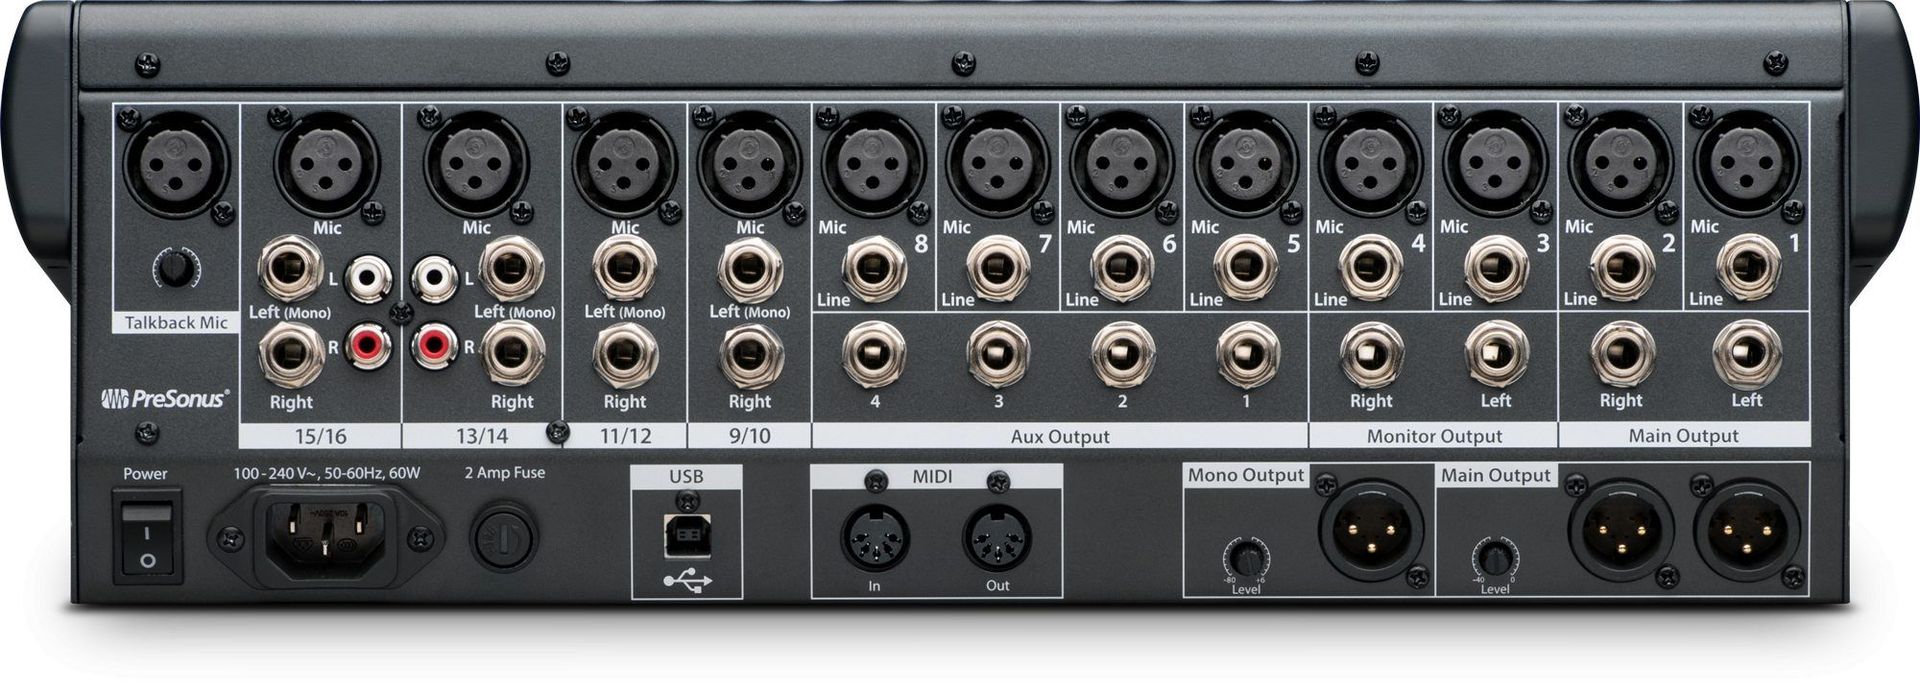 Presonus StudioLive 16.0.2 USB 16-Kanal Digitalmixer mit Audiointerface